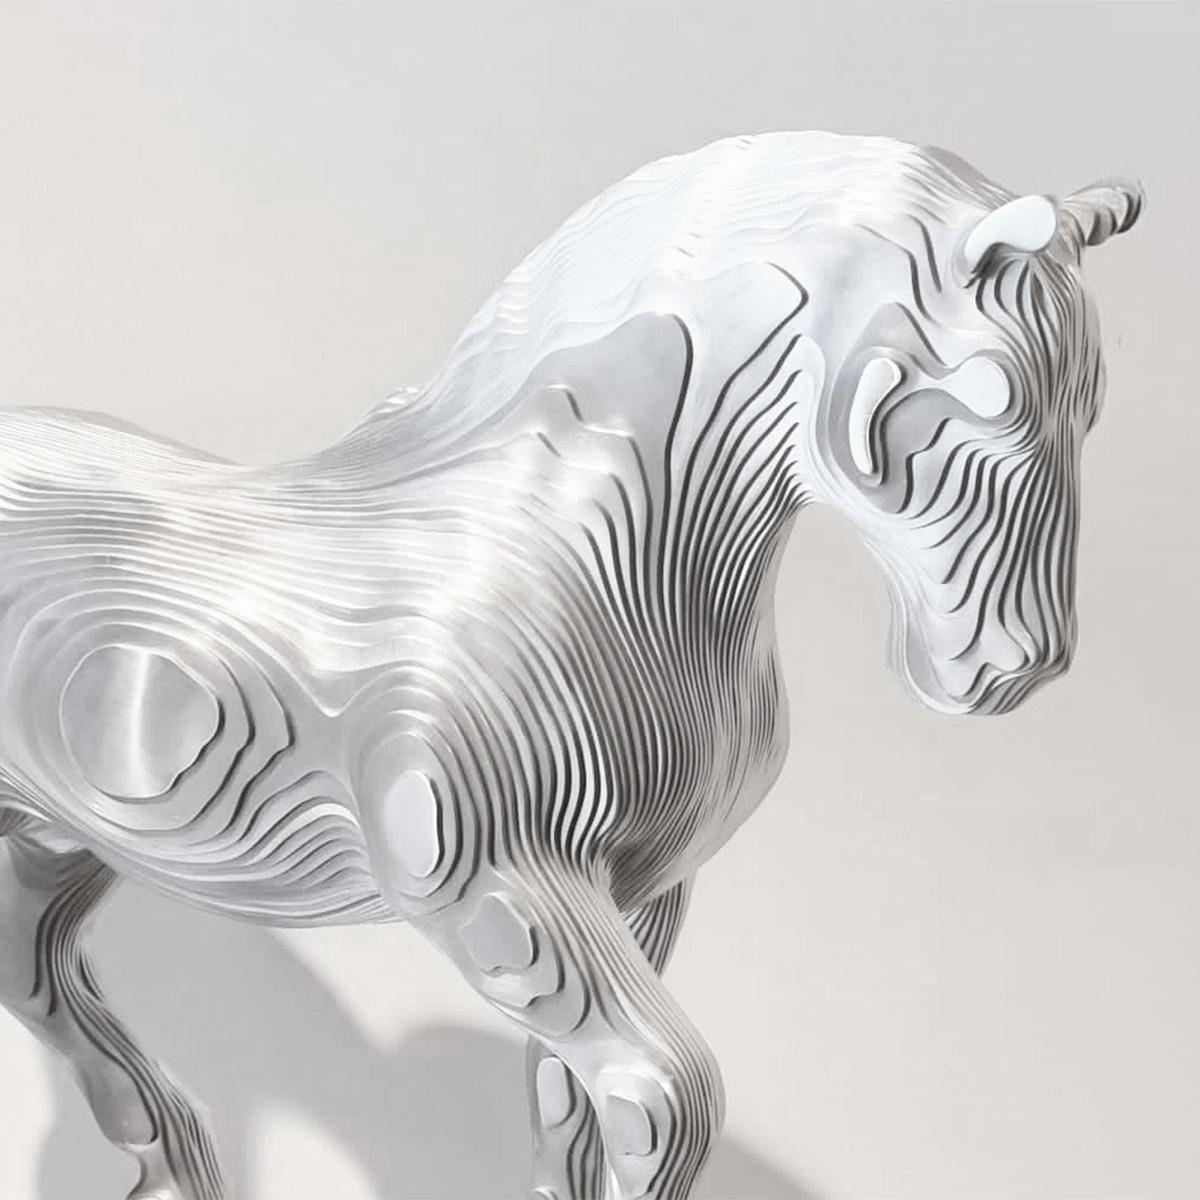 Aluminum Horse Polished Sculpture For Sale